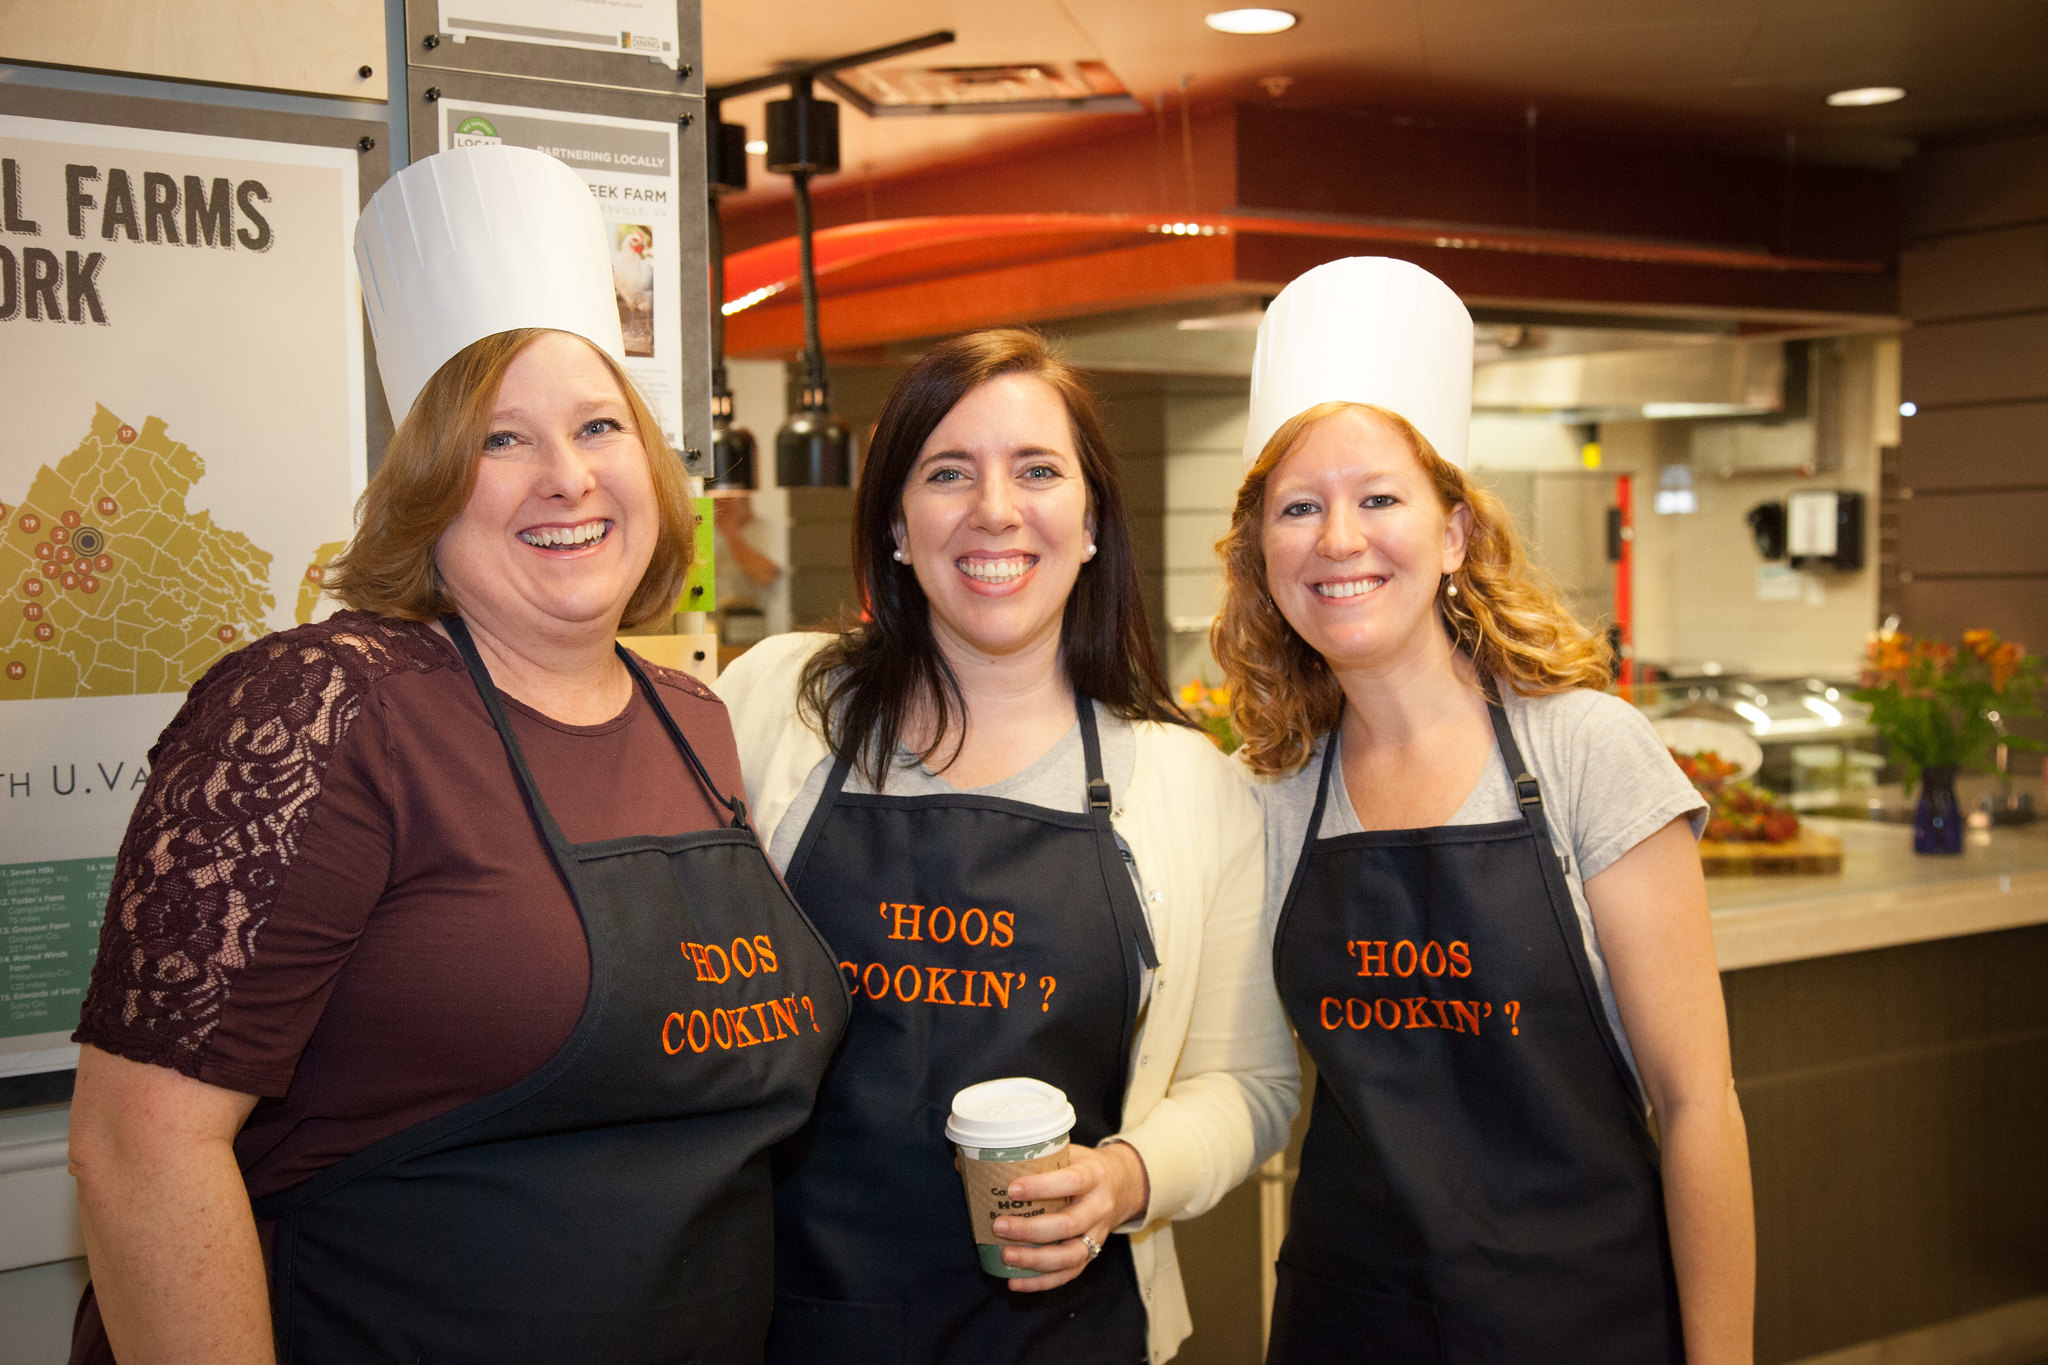 Sarah and Collogues smiling wearing 'Hoos Cooking Aprons 